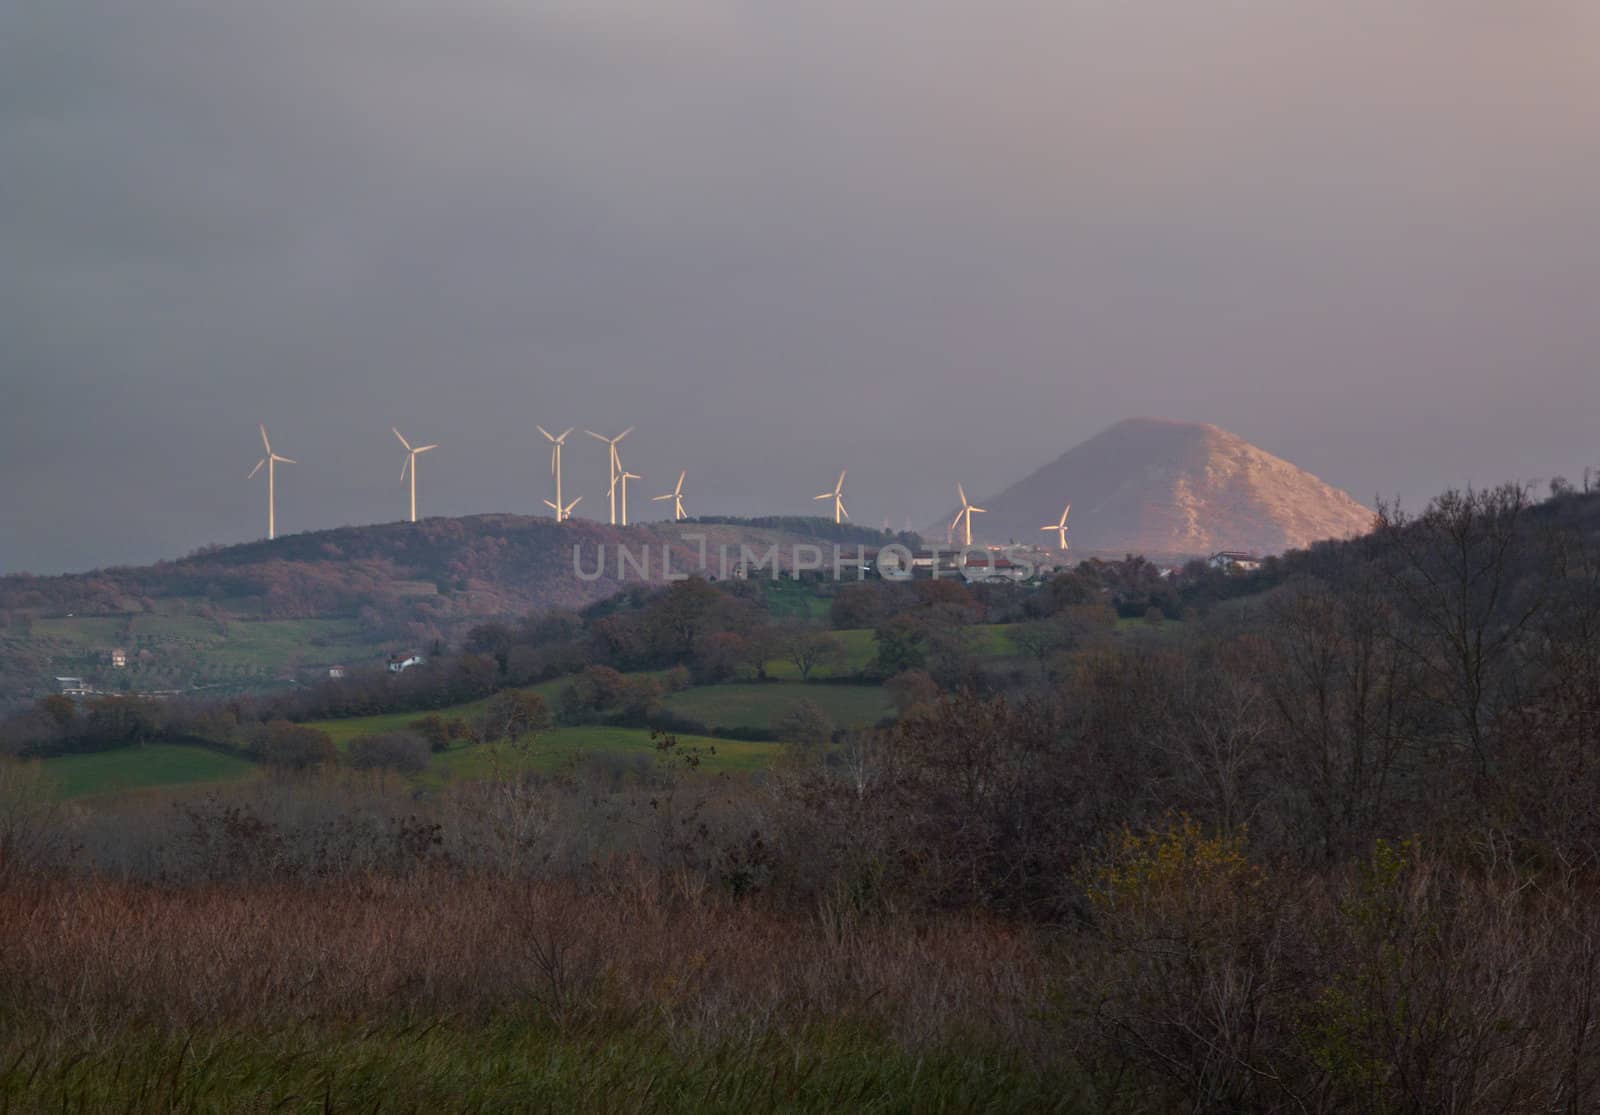 ITALY, Campania, Salerno, countryside, Eolic energy turbines  by agiampiccolo